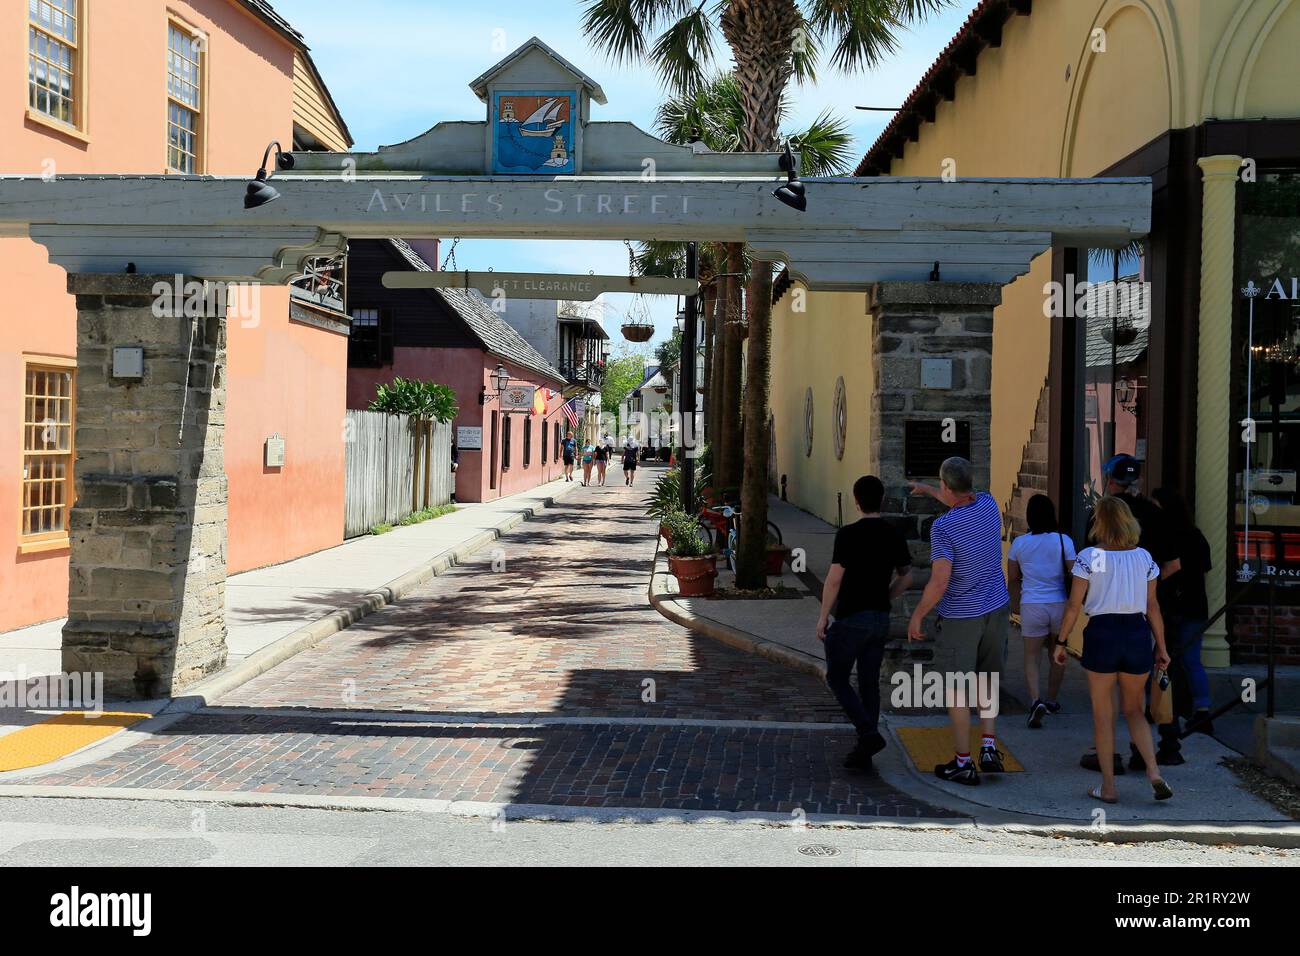 Aviles Street, St. Augustine, Florida, USA Stock Photo